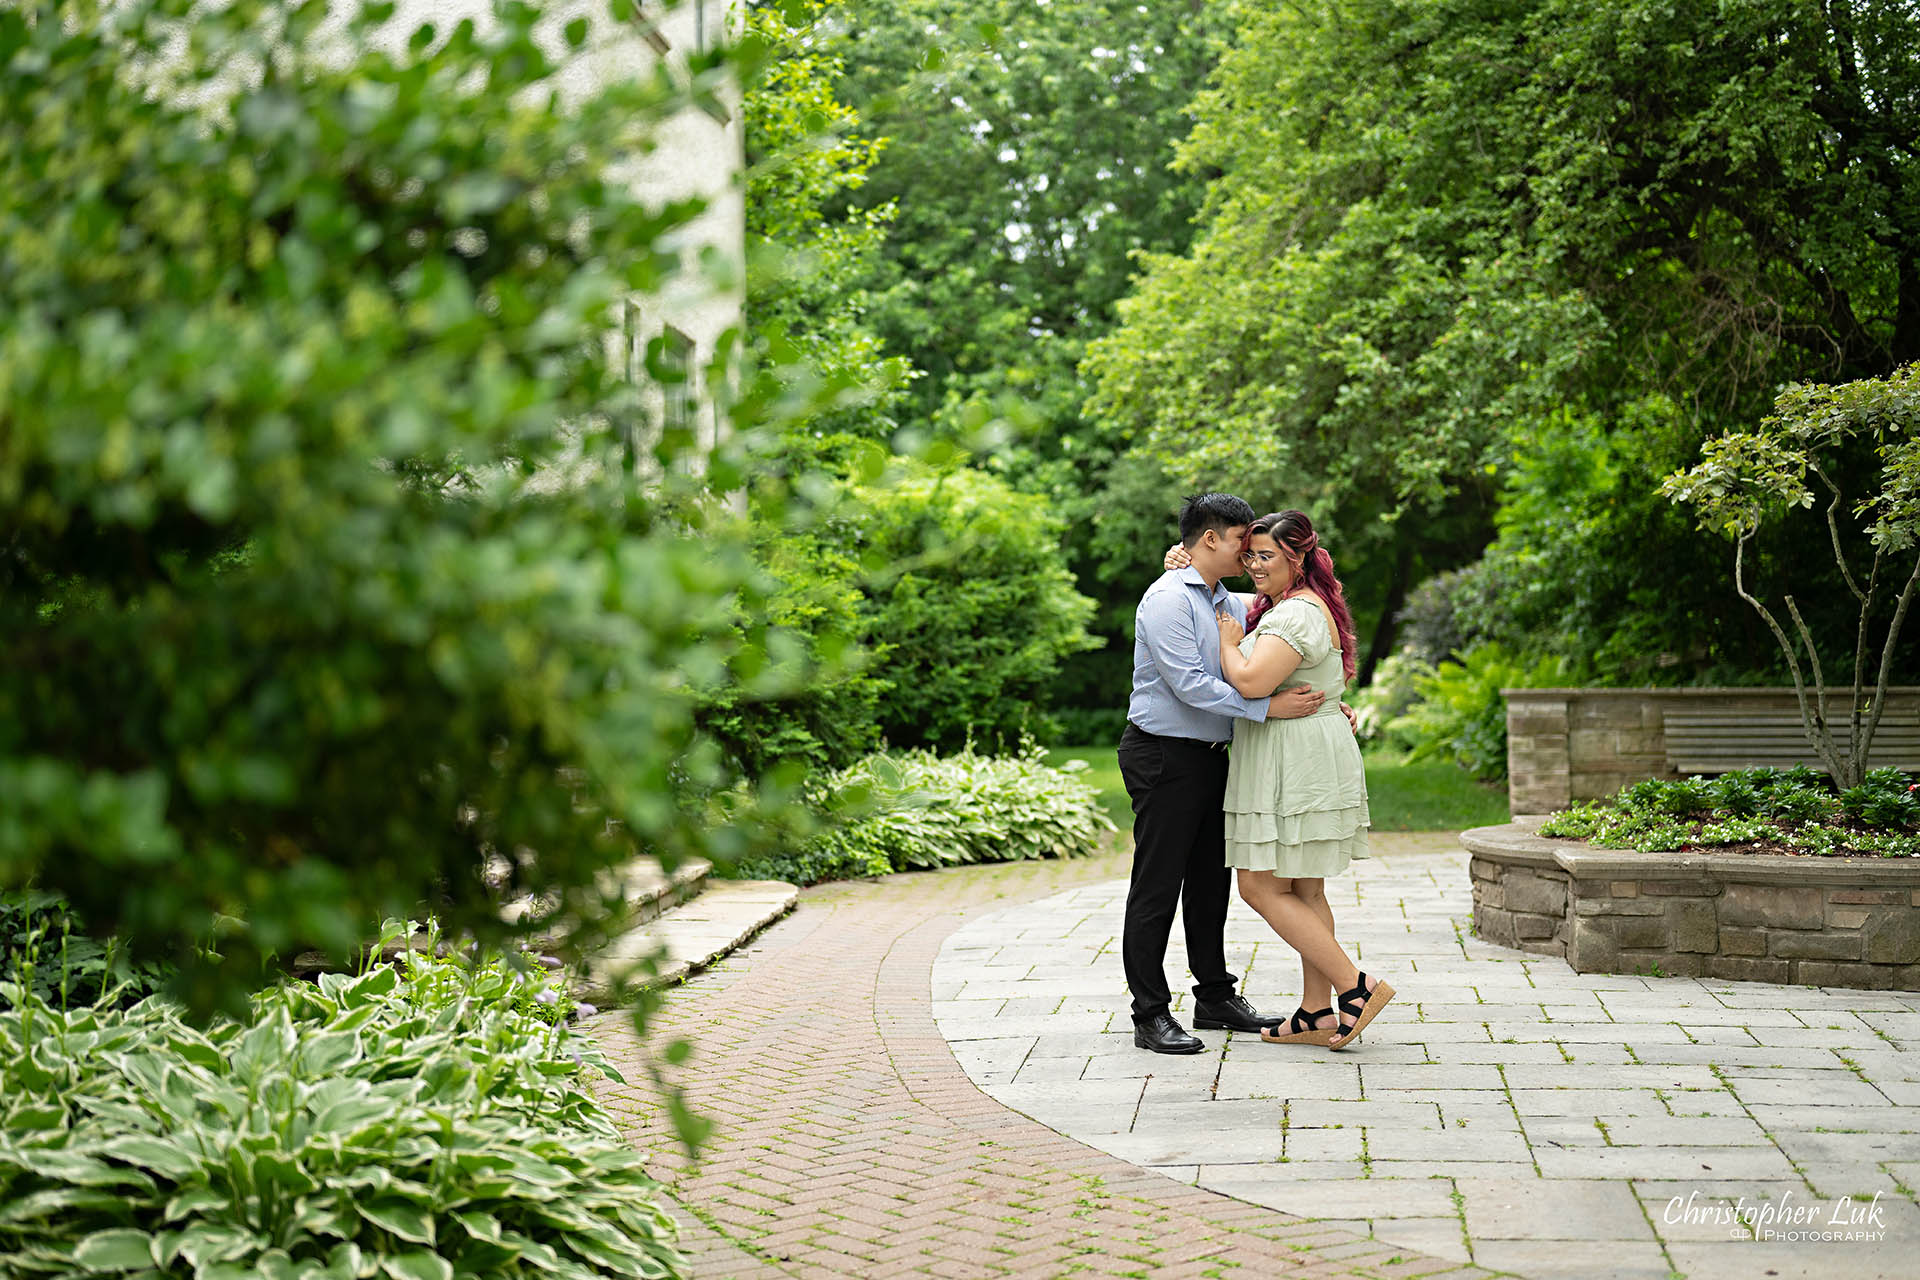 Adamson Estate Landscaped Garden Terrace Bride Groom Intimate Kiss Candid Organic Natural Photojournalistic Landscape